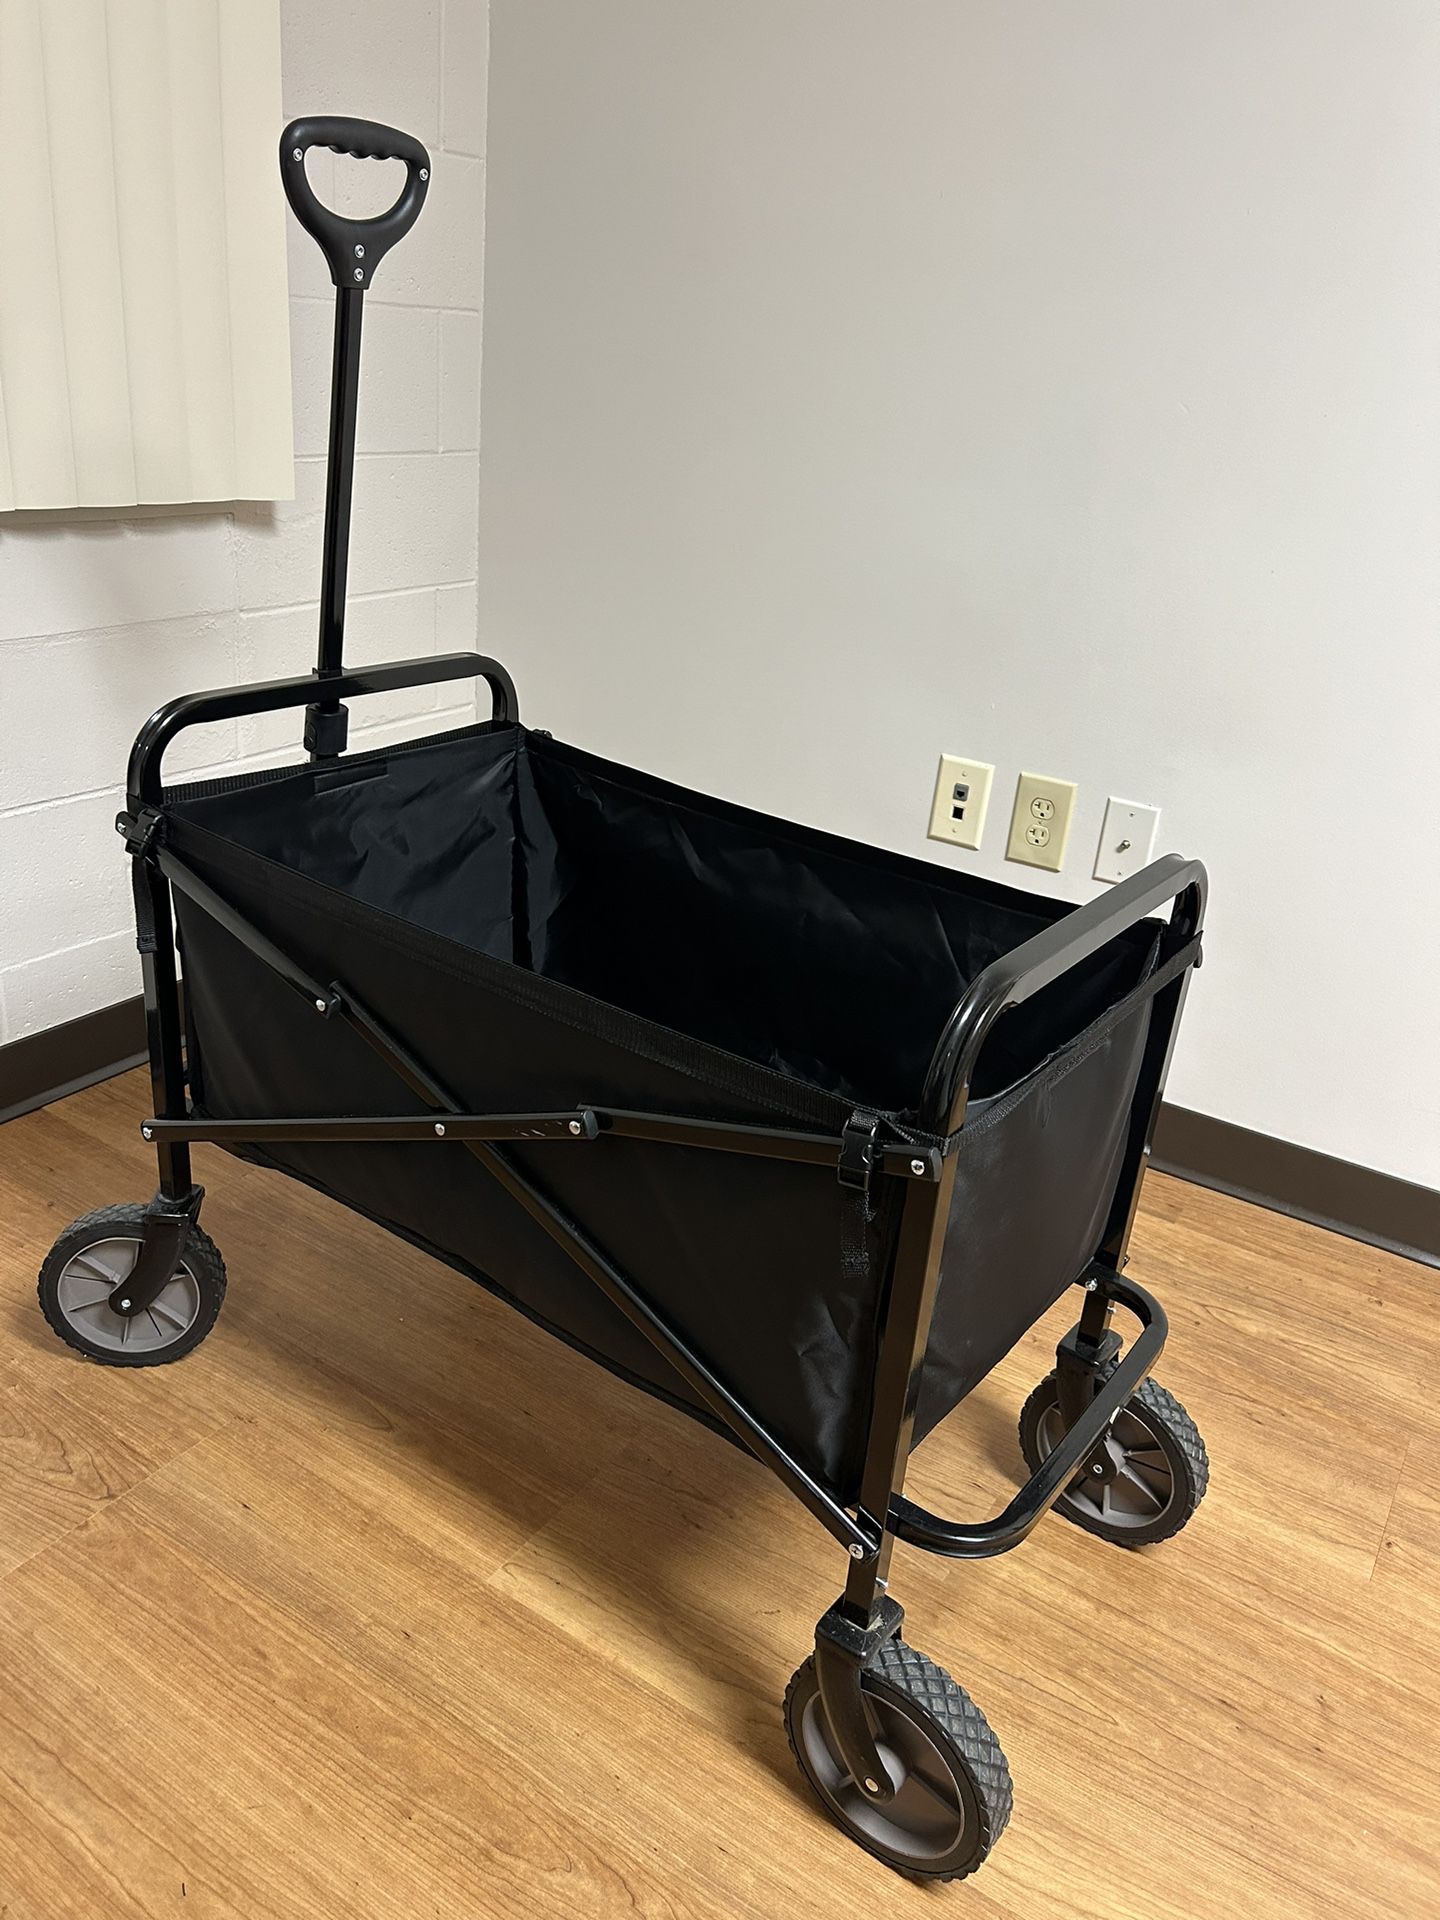 Amazon Foldable Wagon (Black)